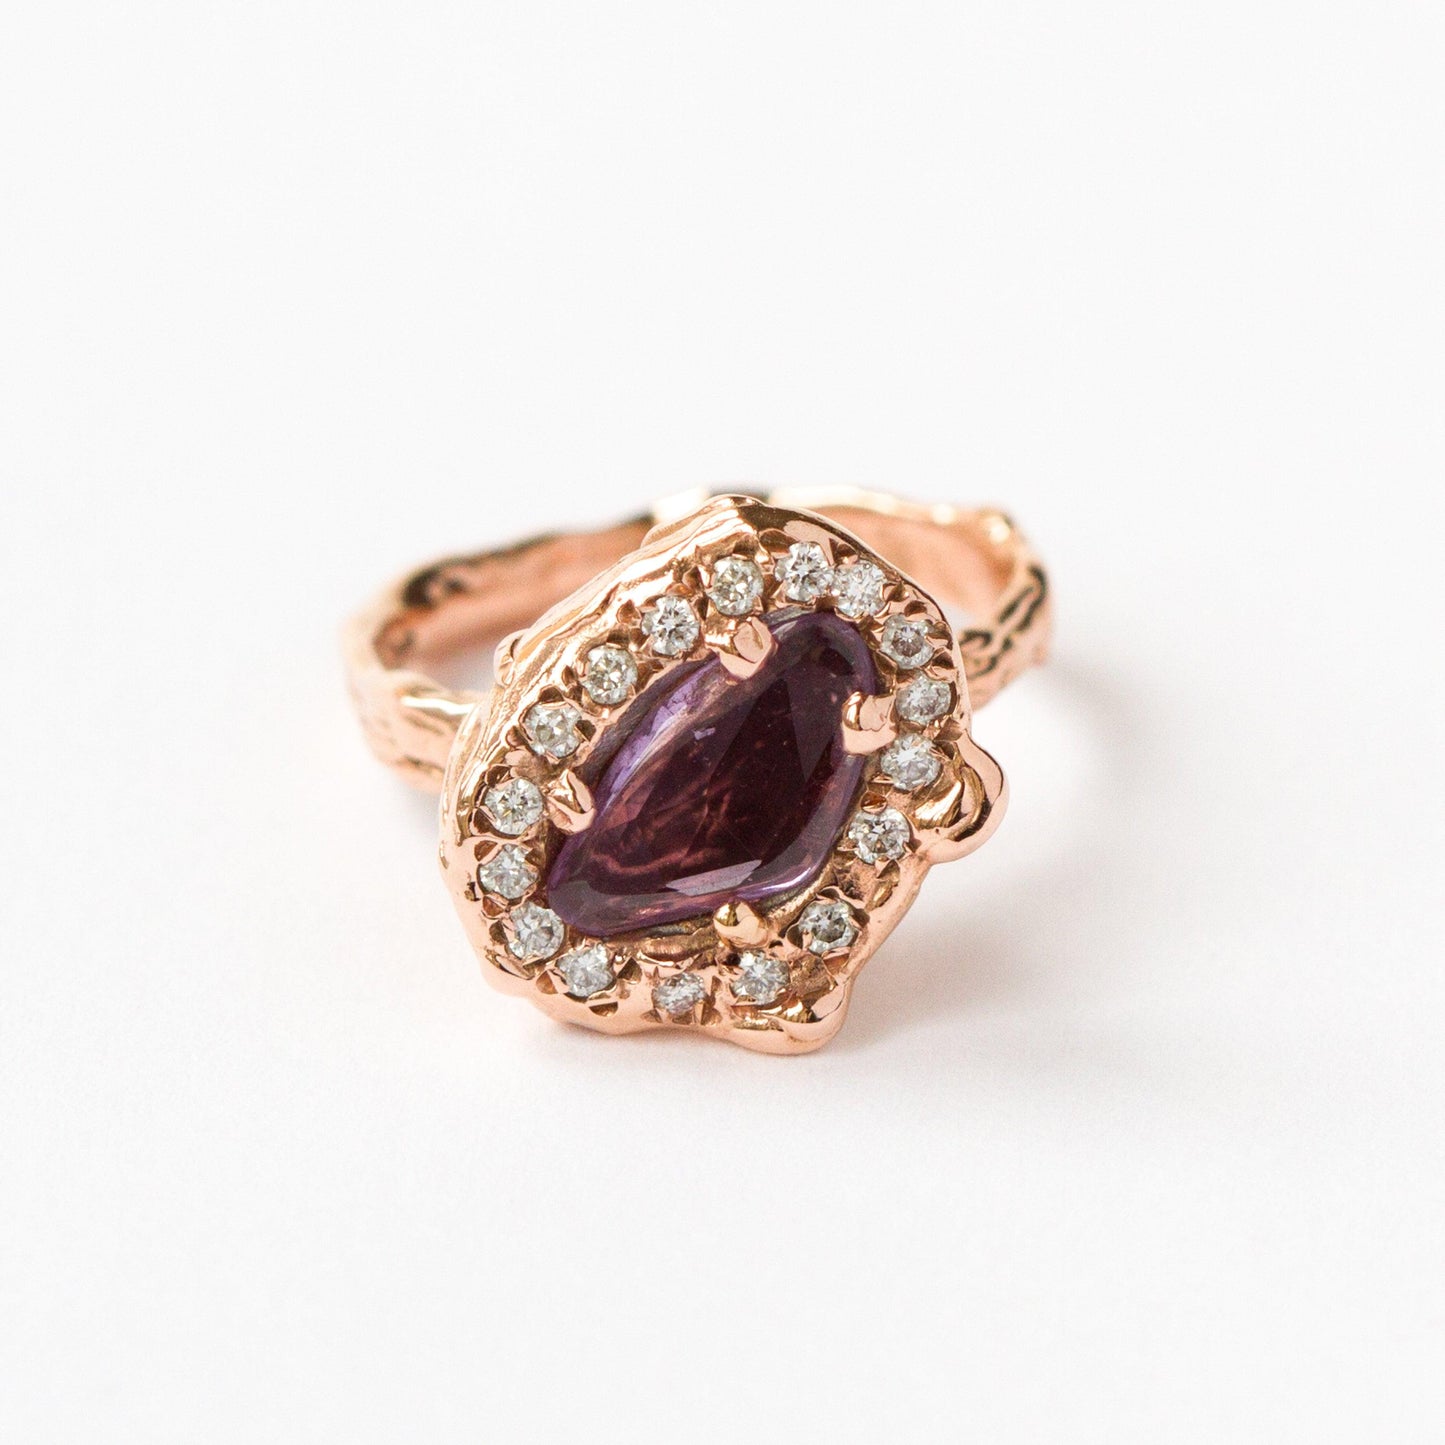 Rose gold ring handmade set with white diamonds and rose/purple sapphire rose cut - LaParra Jewels-BESPOKE HAND MADE JEWLERY LONDON